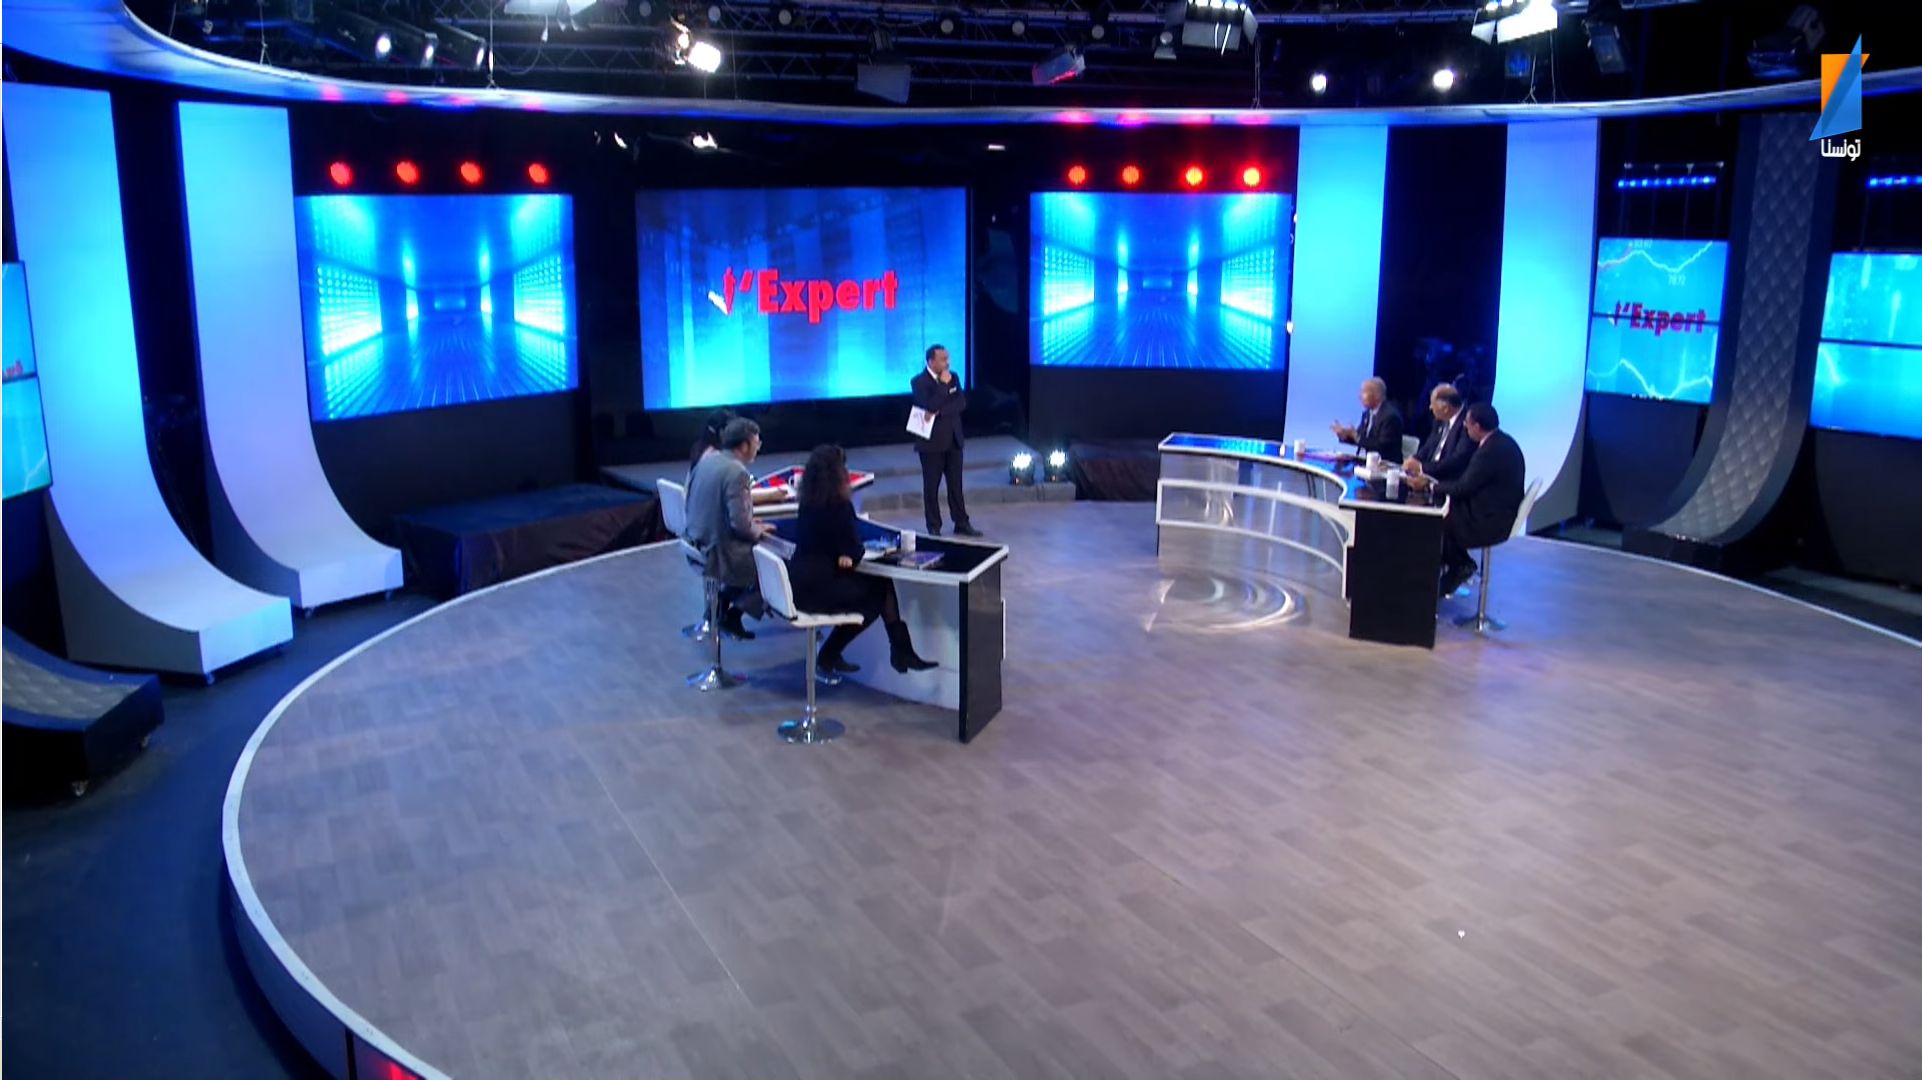 studio iverview tunisna tv with Salem Miladi as expert panel member